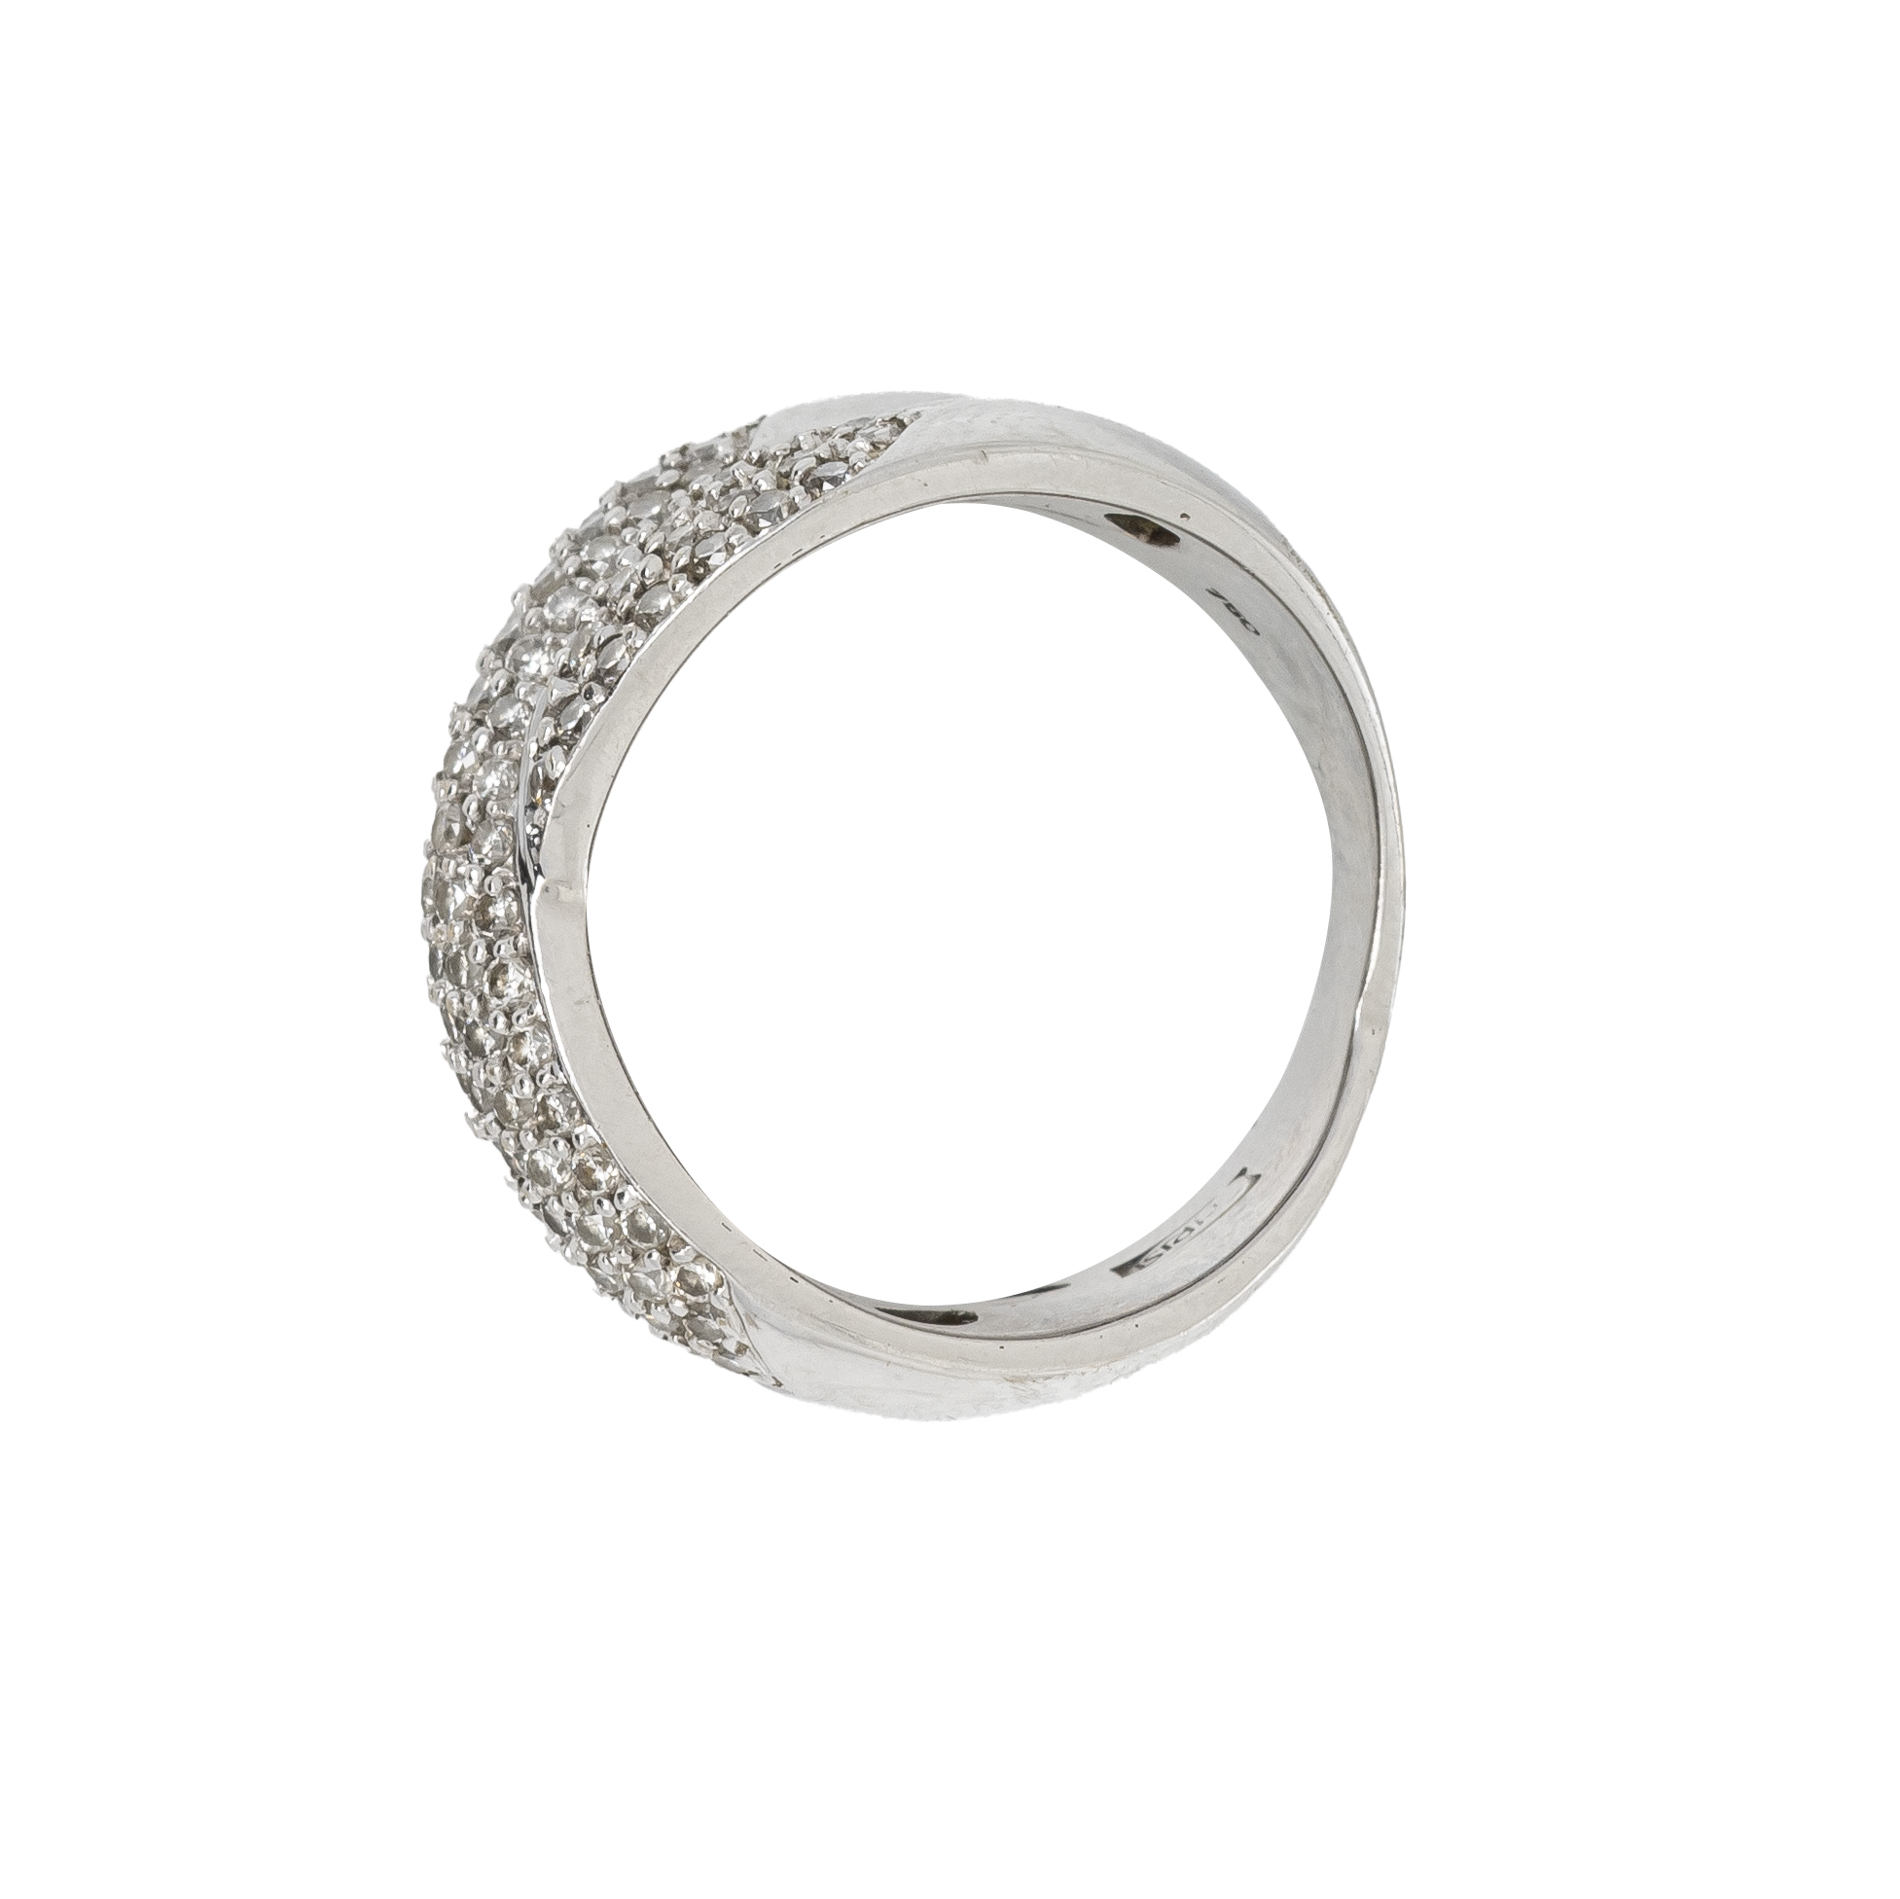 Massiver Weissgold Ring mit Diamantbesatz - Image 2 of 2